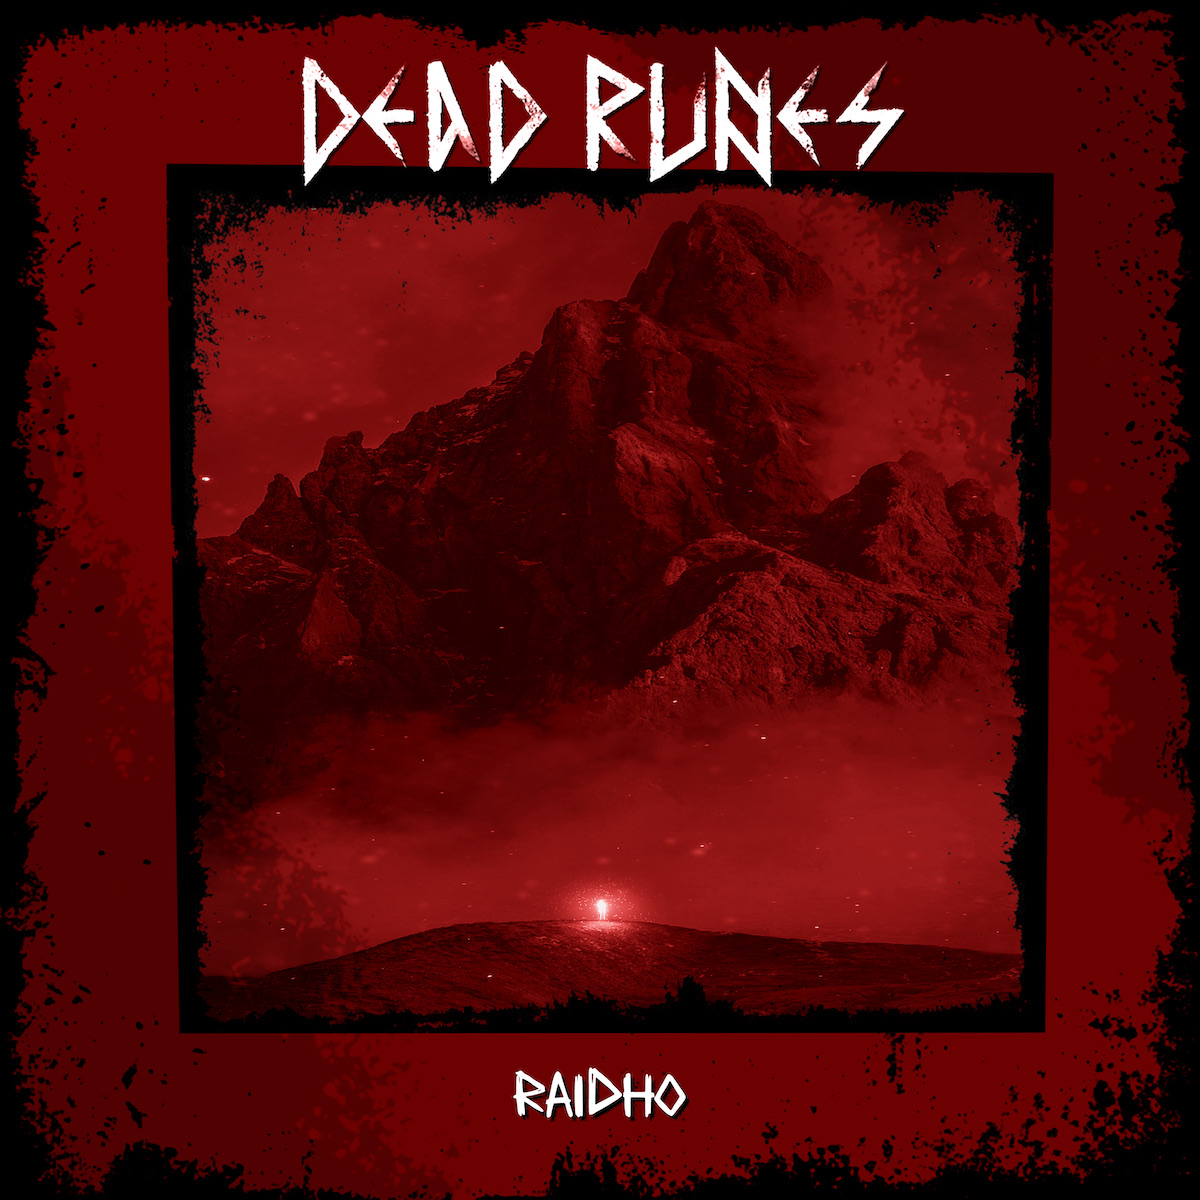 ALBUM REVIEW: Raidho by Dead Runes